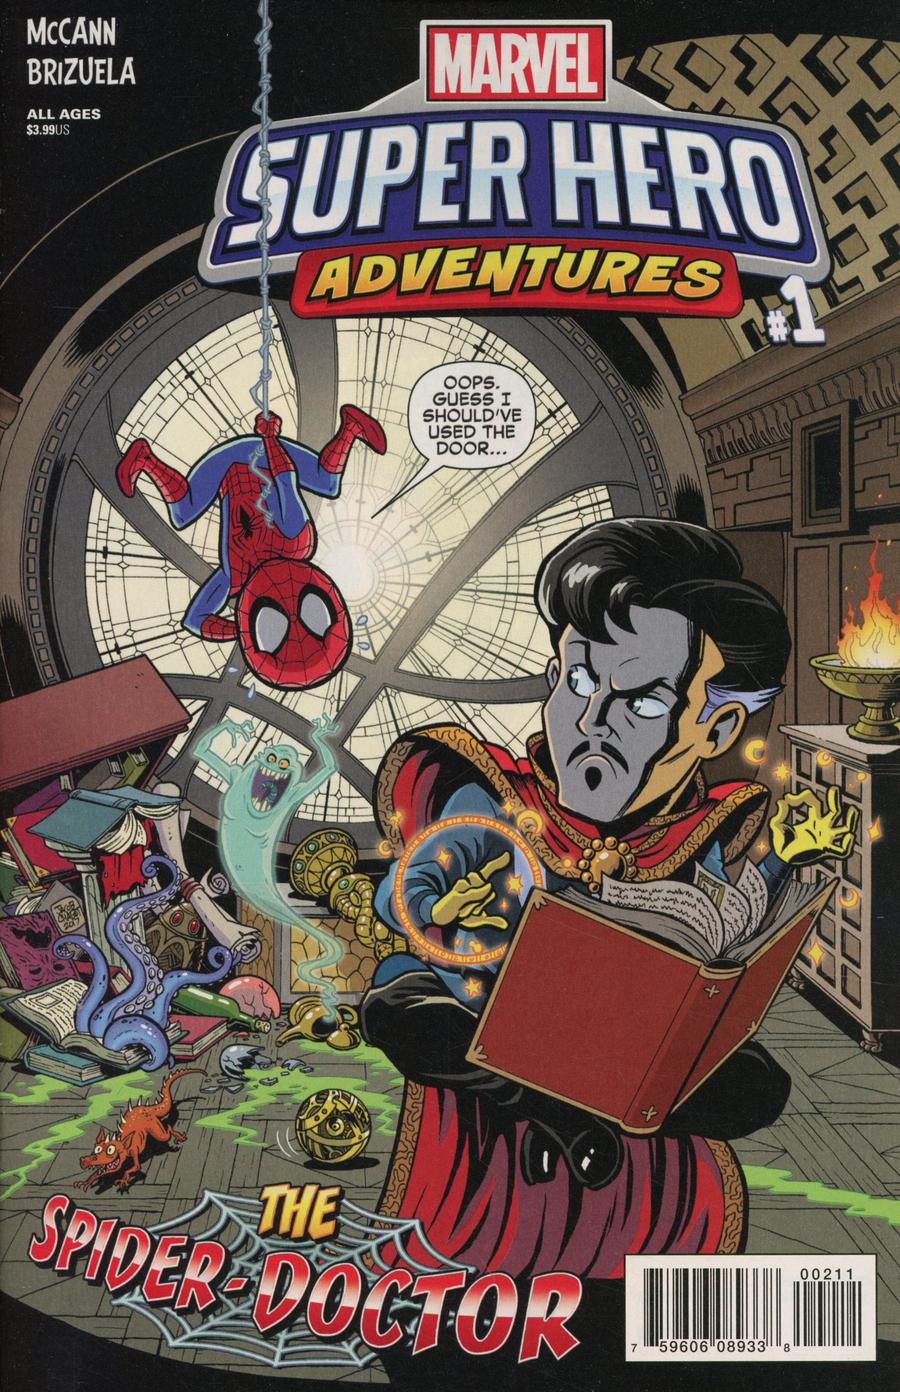 Marvel Super Hero Adventures #2 The Spider-Doctor